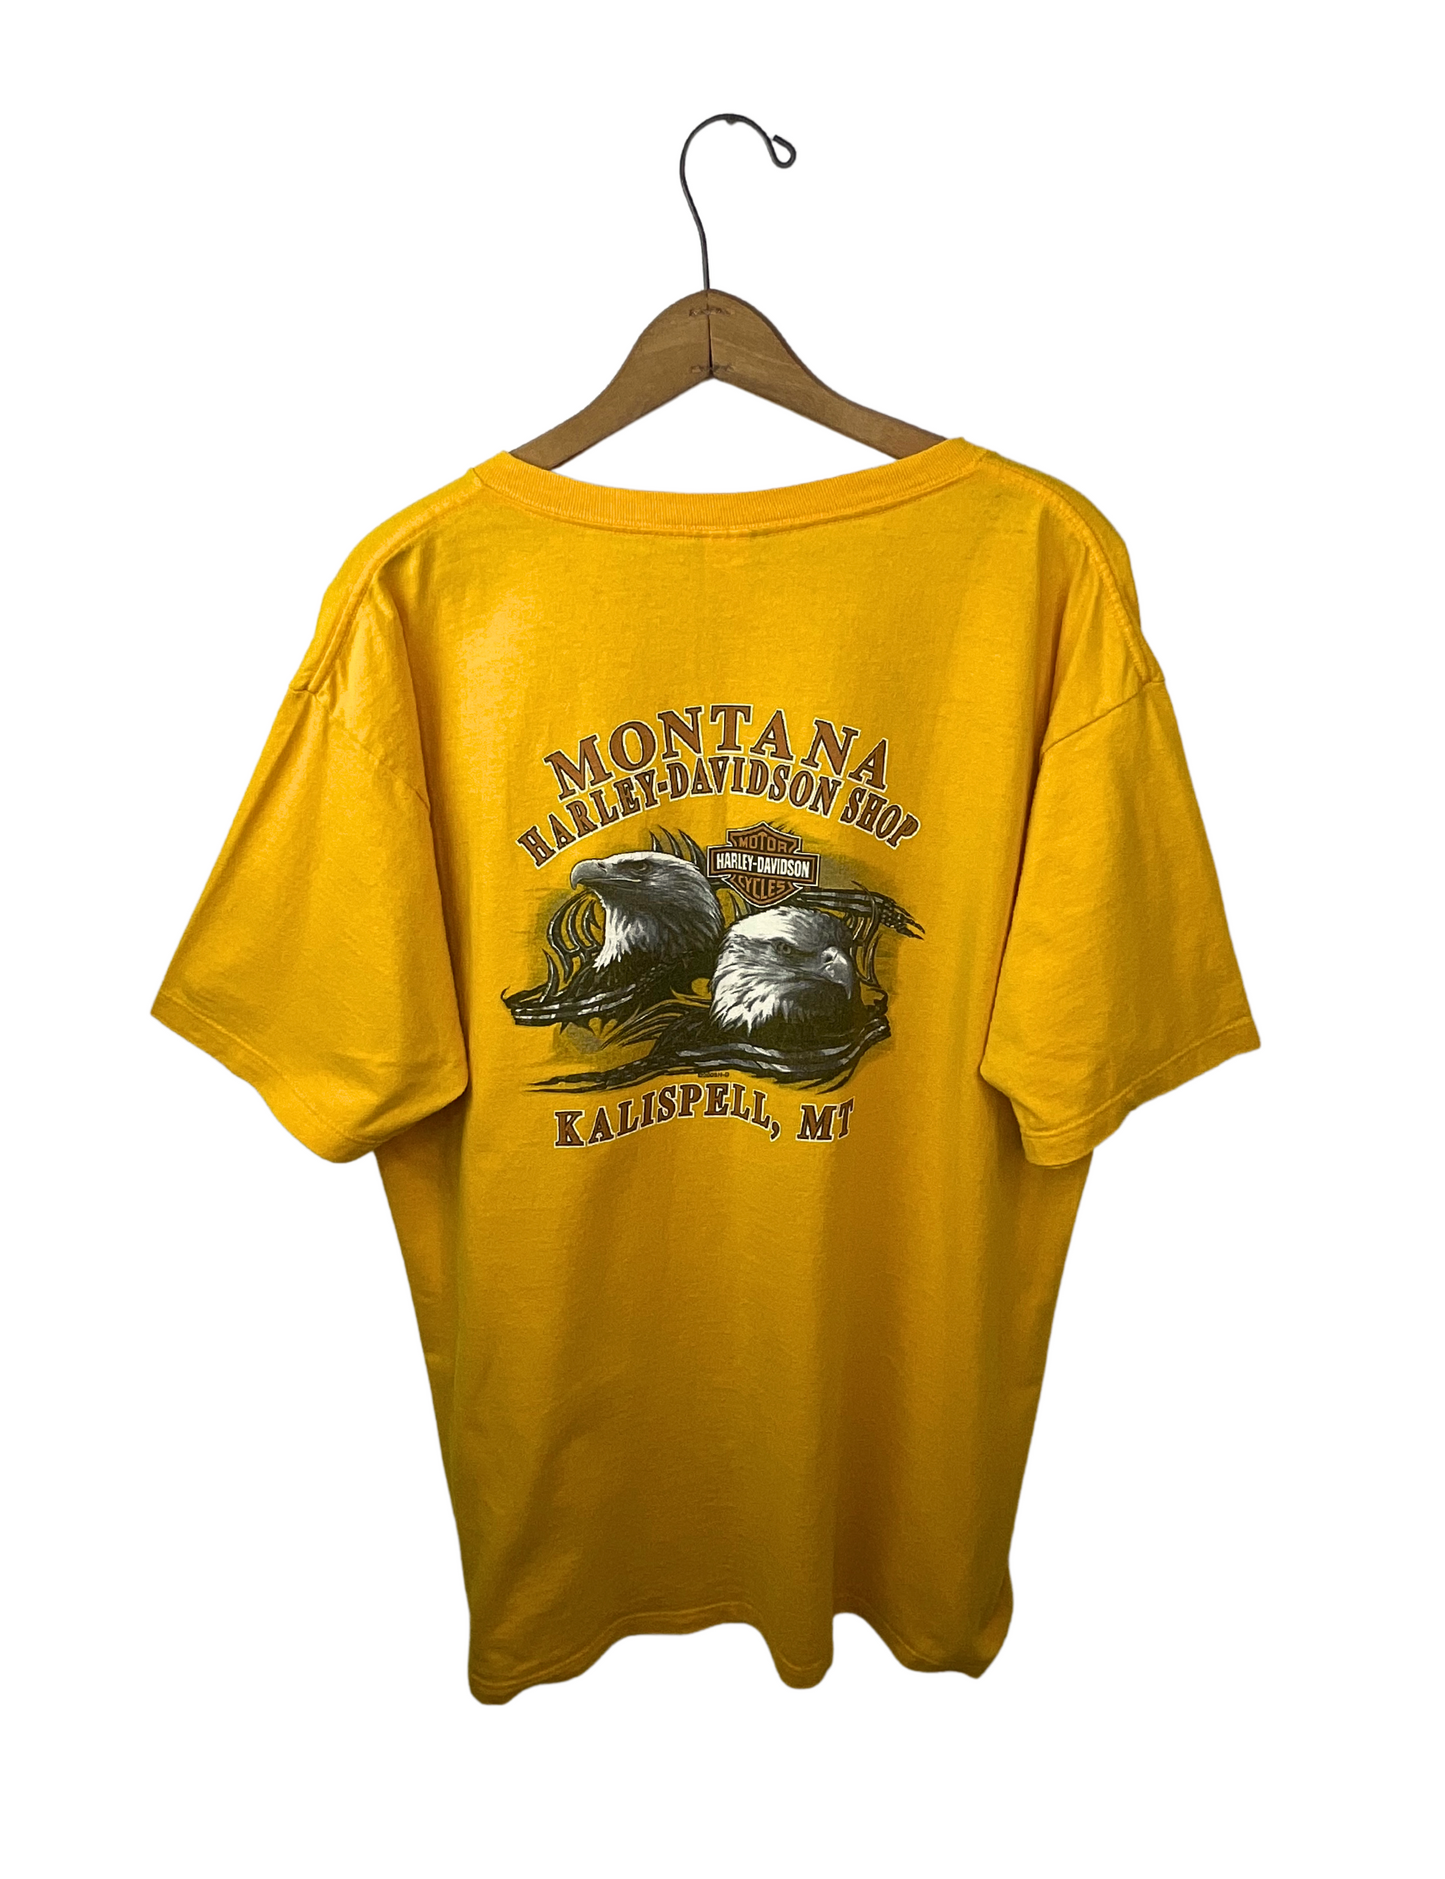 2005 Harley Davidson Kalispell, Montana Bald Eagle Biker T-shirt Size XL